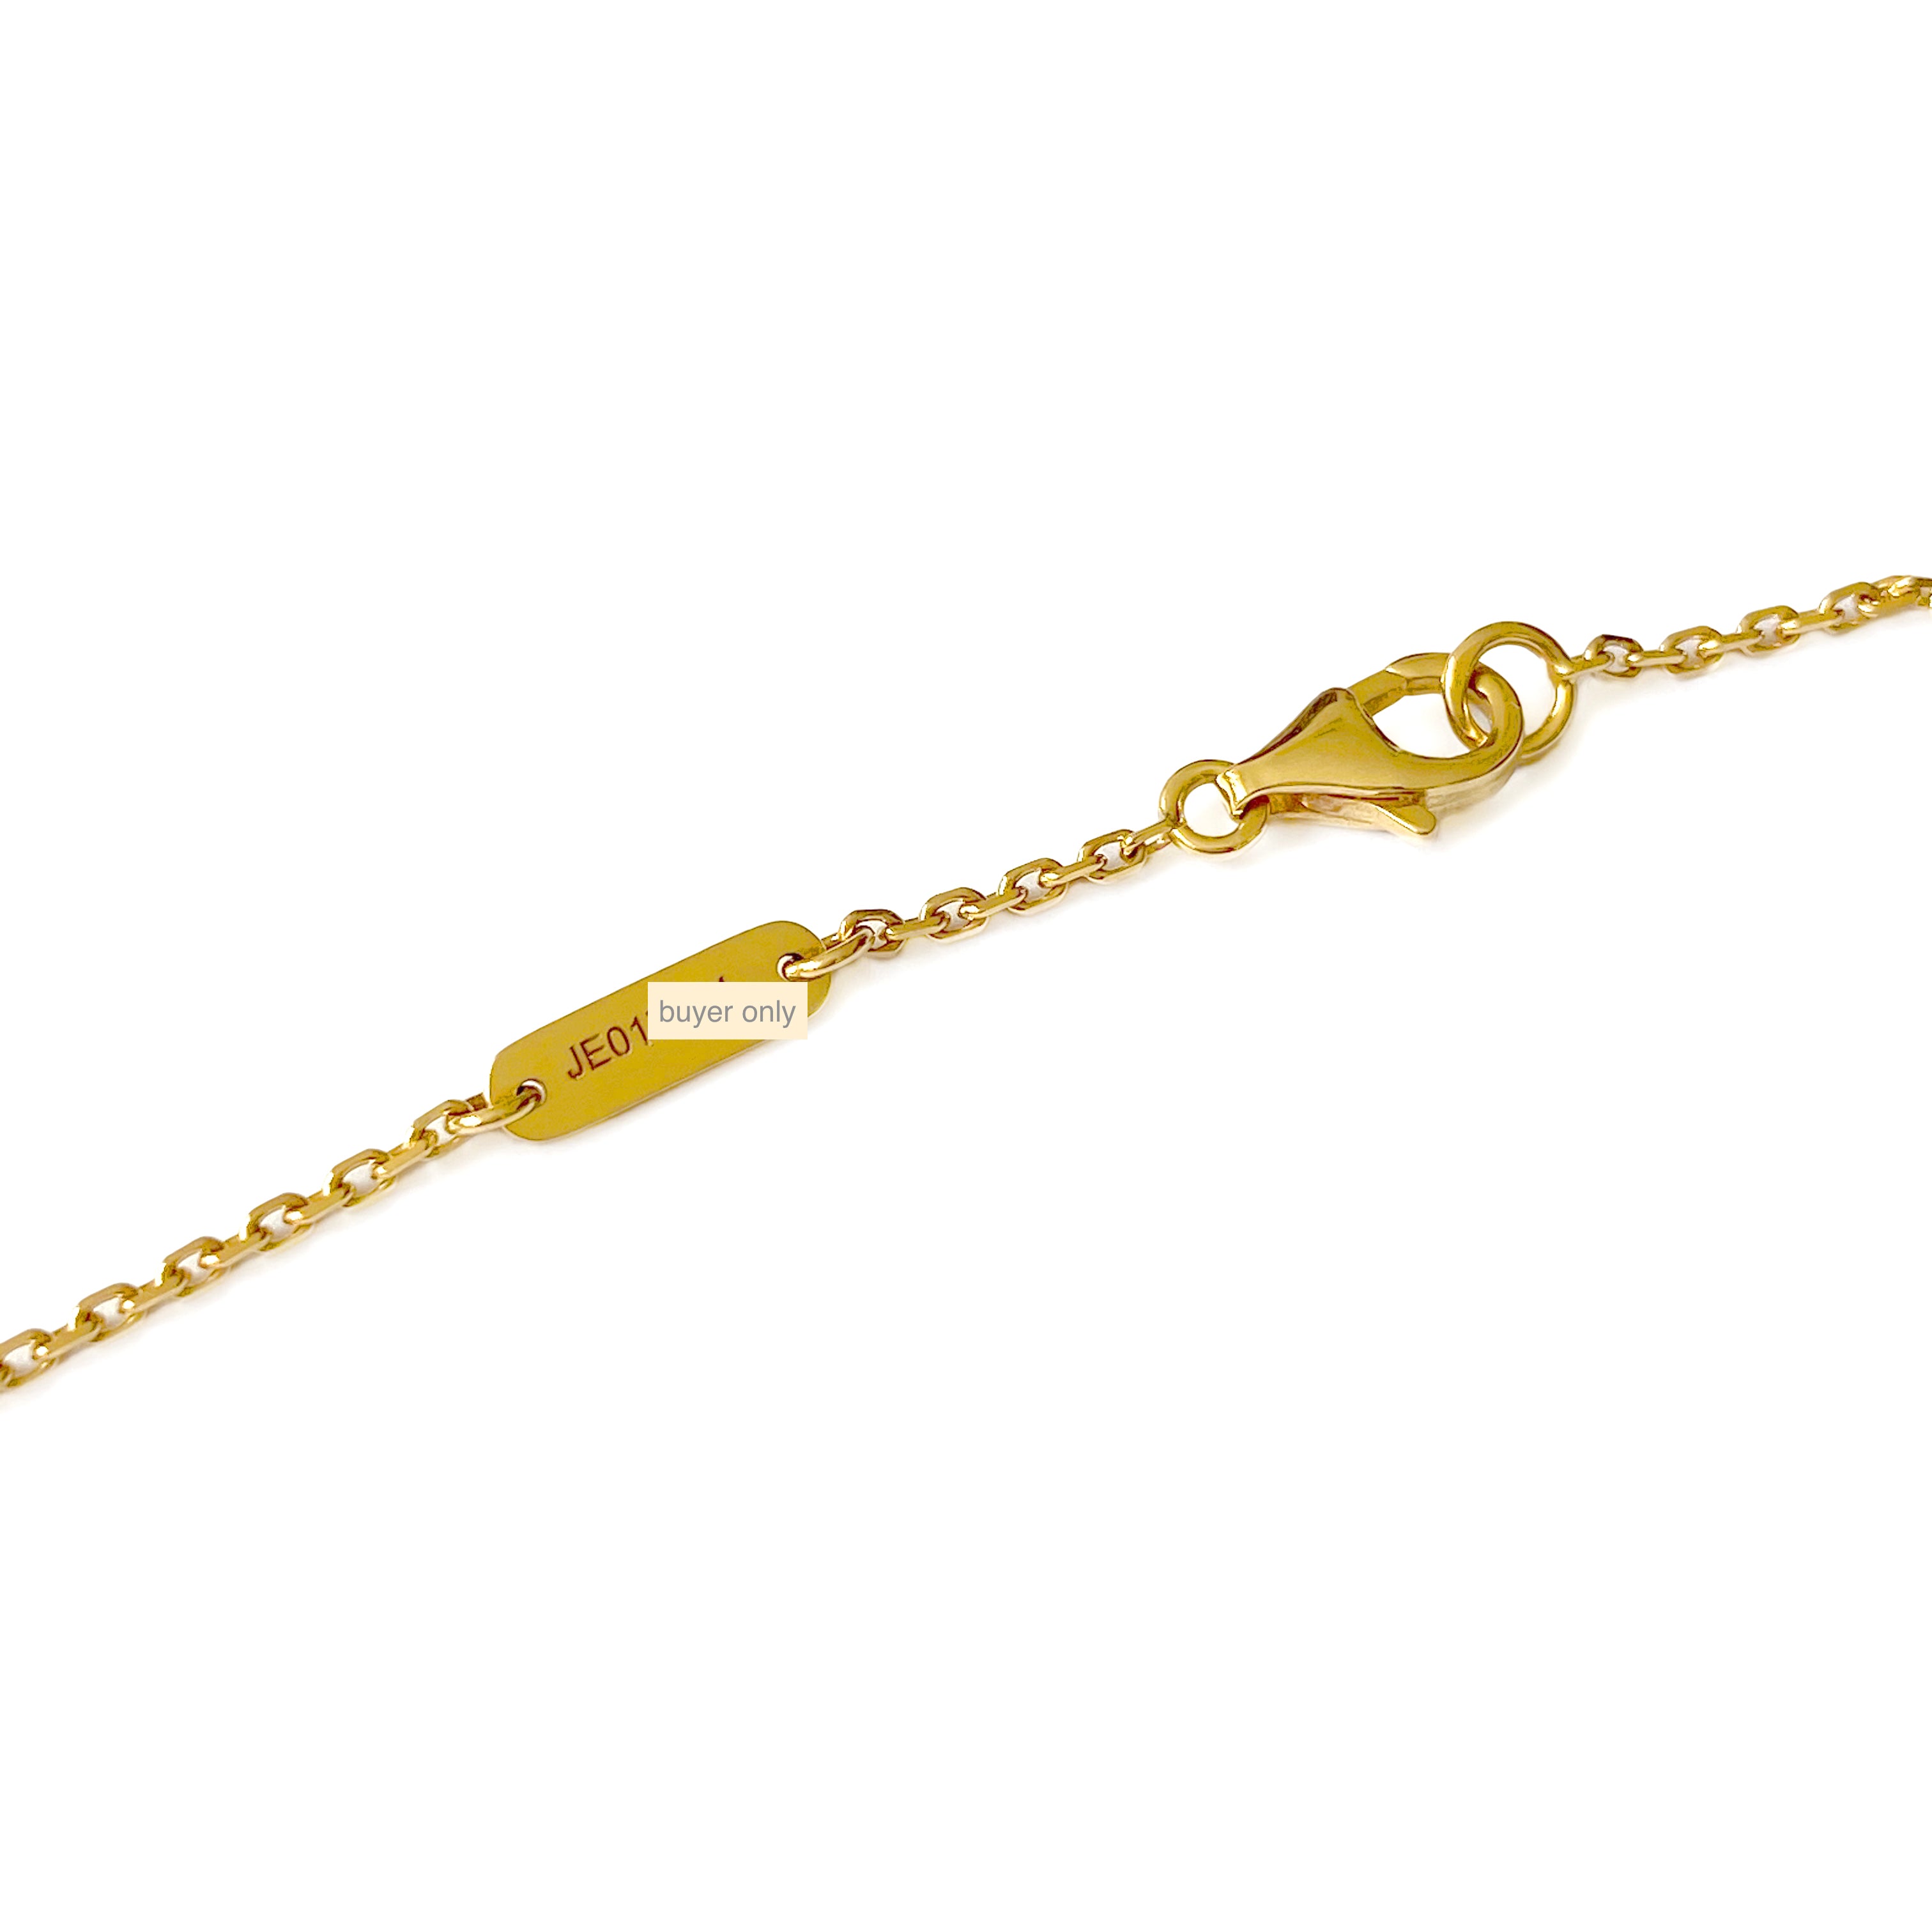 Vintage Alhambra 2013 Holiday Diamond Pendant Necklace in Malachite 18k Yellow Gold